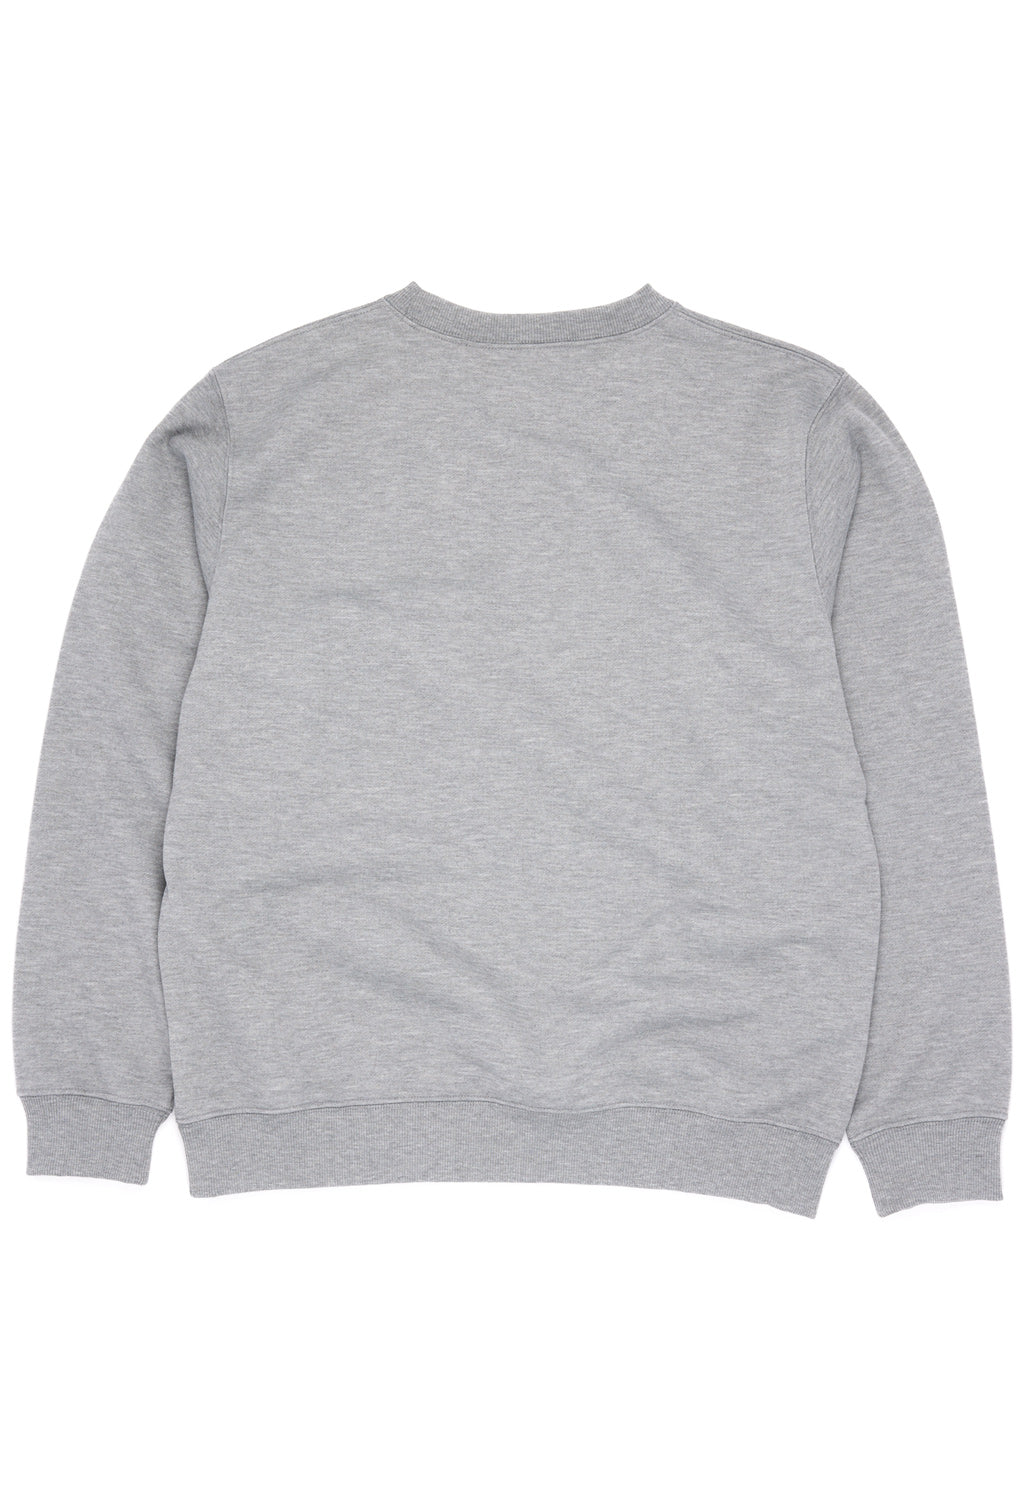 Gramicci x And Wander Pocket Sweatshirt - Grey